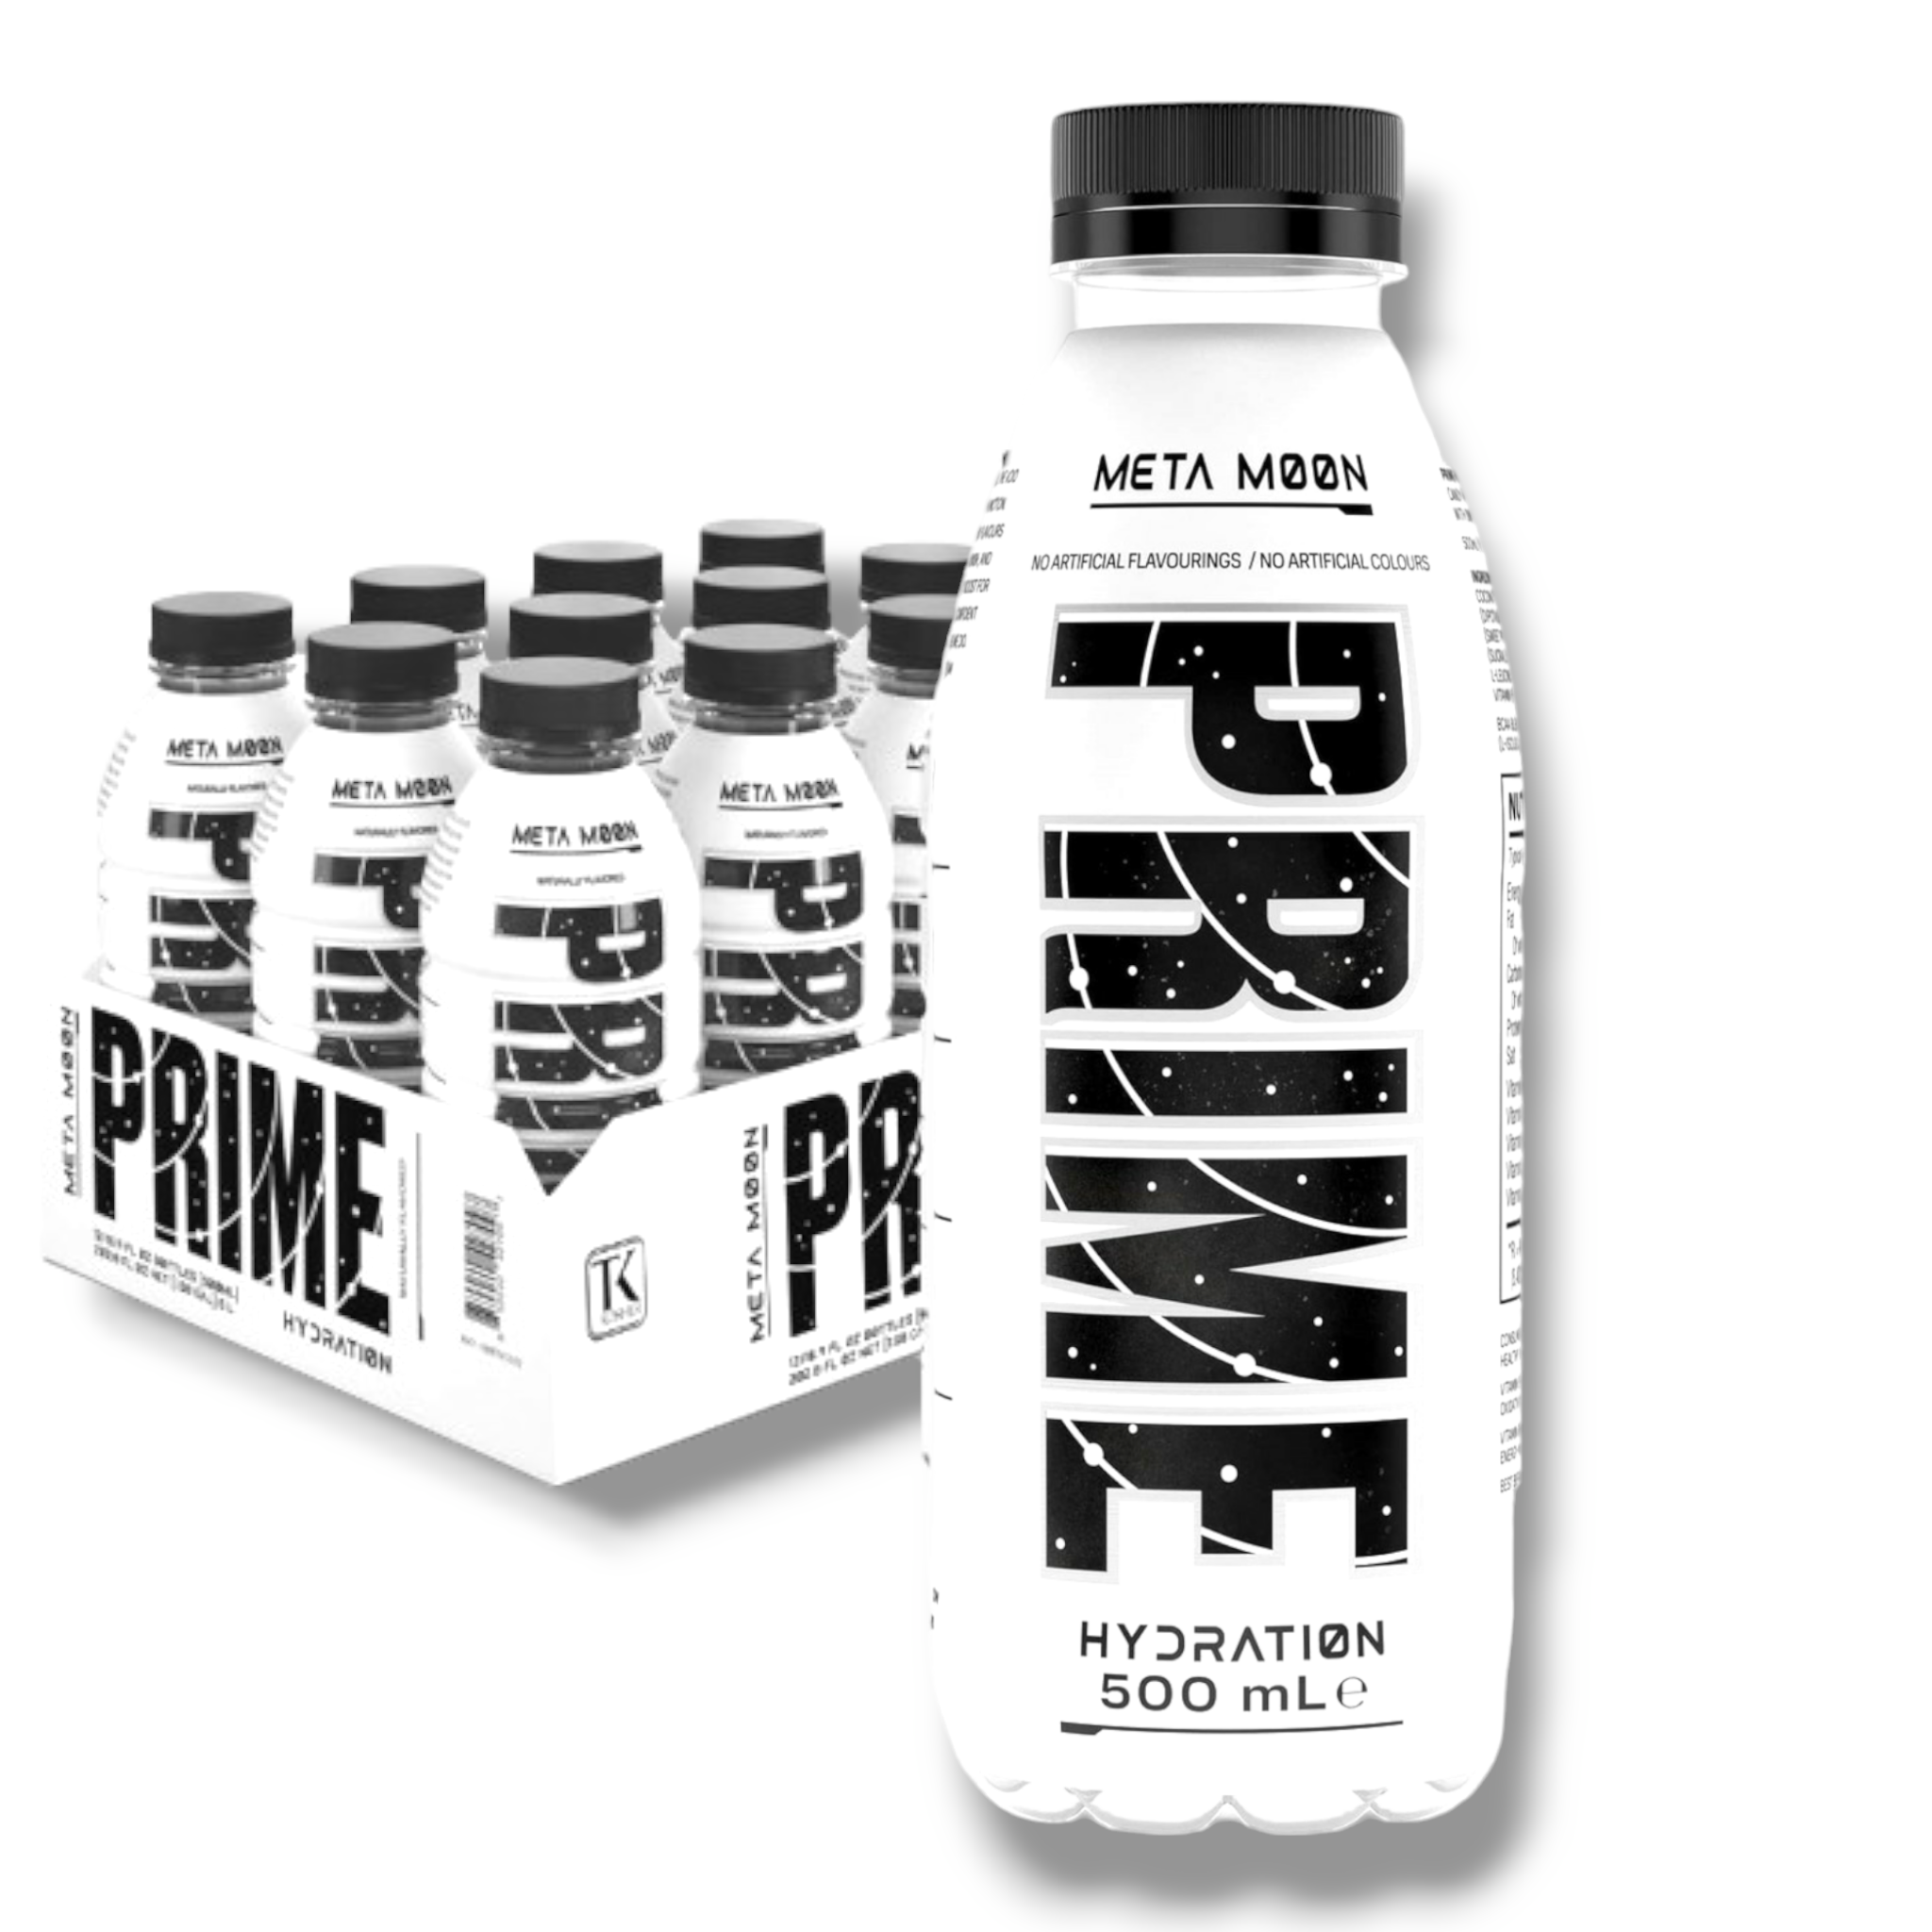 Prime Hydration Drink - Meta Moon 500ml- Sportdrink von Logan Paul & KSI-Koffeinfrei